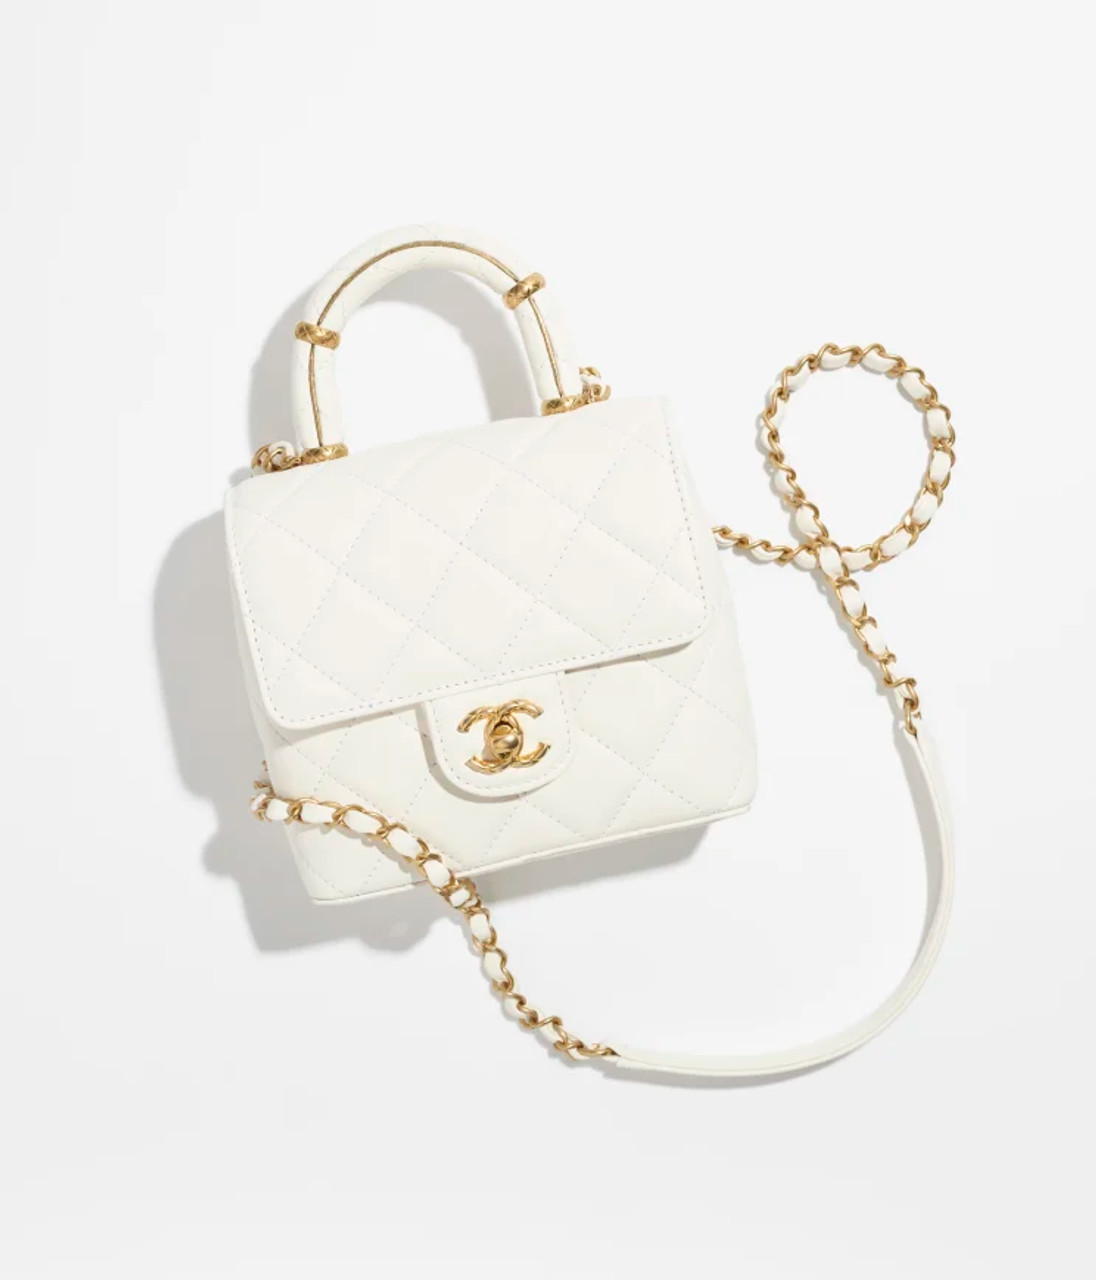 My Top 3 Favorite Chanel Bags | Gallery posted by Elyse Aiyana | Lemon8